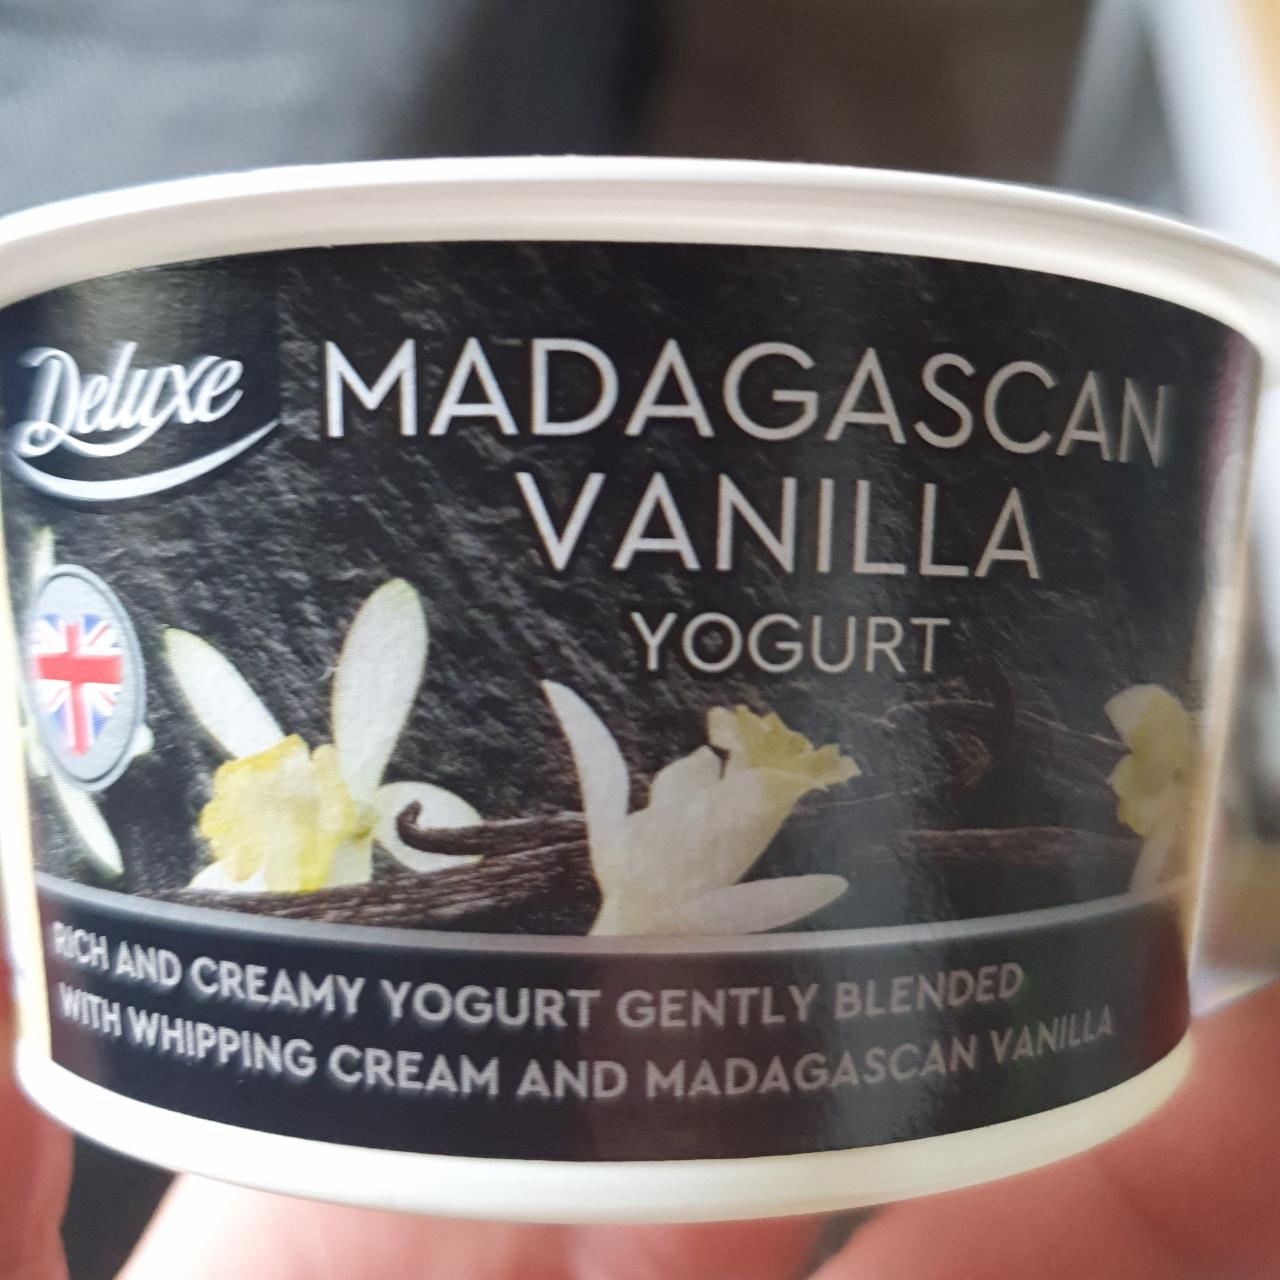 Fotografie - Madagascan vanilla yogurt Deluxe